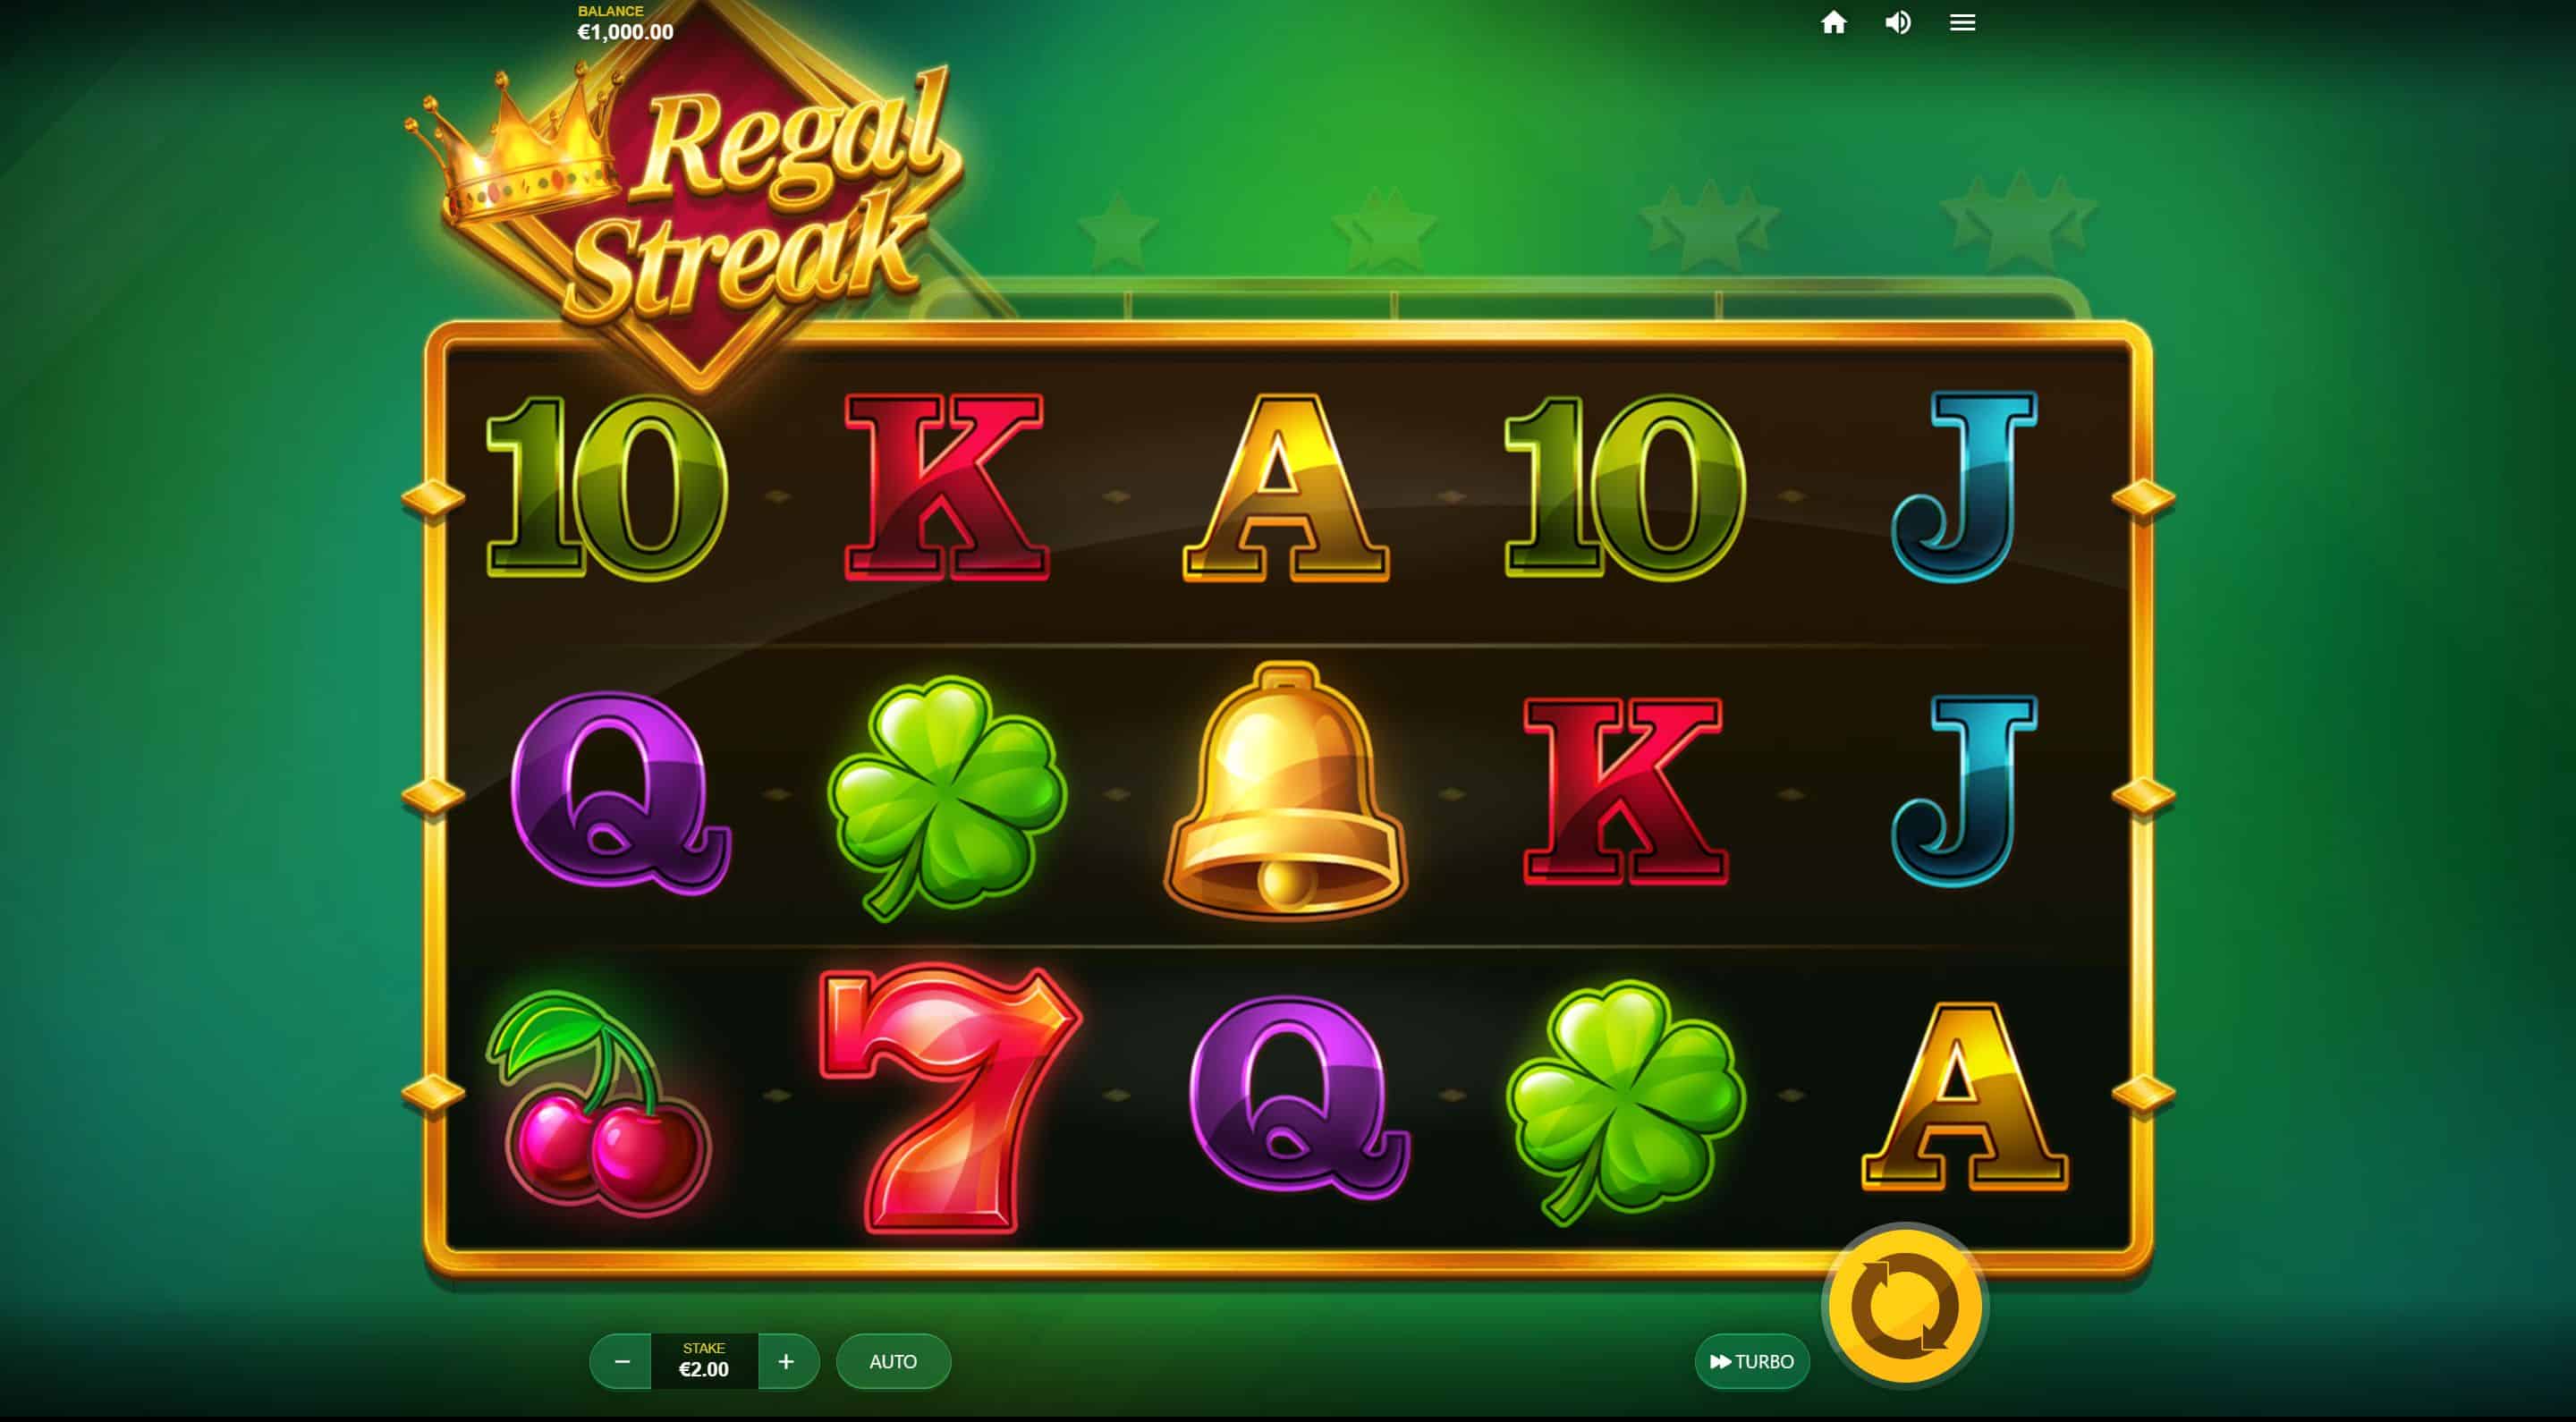 Regal Streak Mauritius at Game Slot Casino Free Play